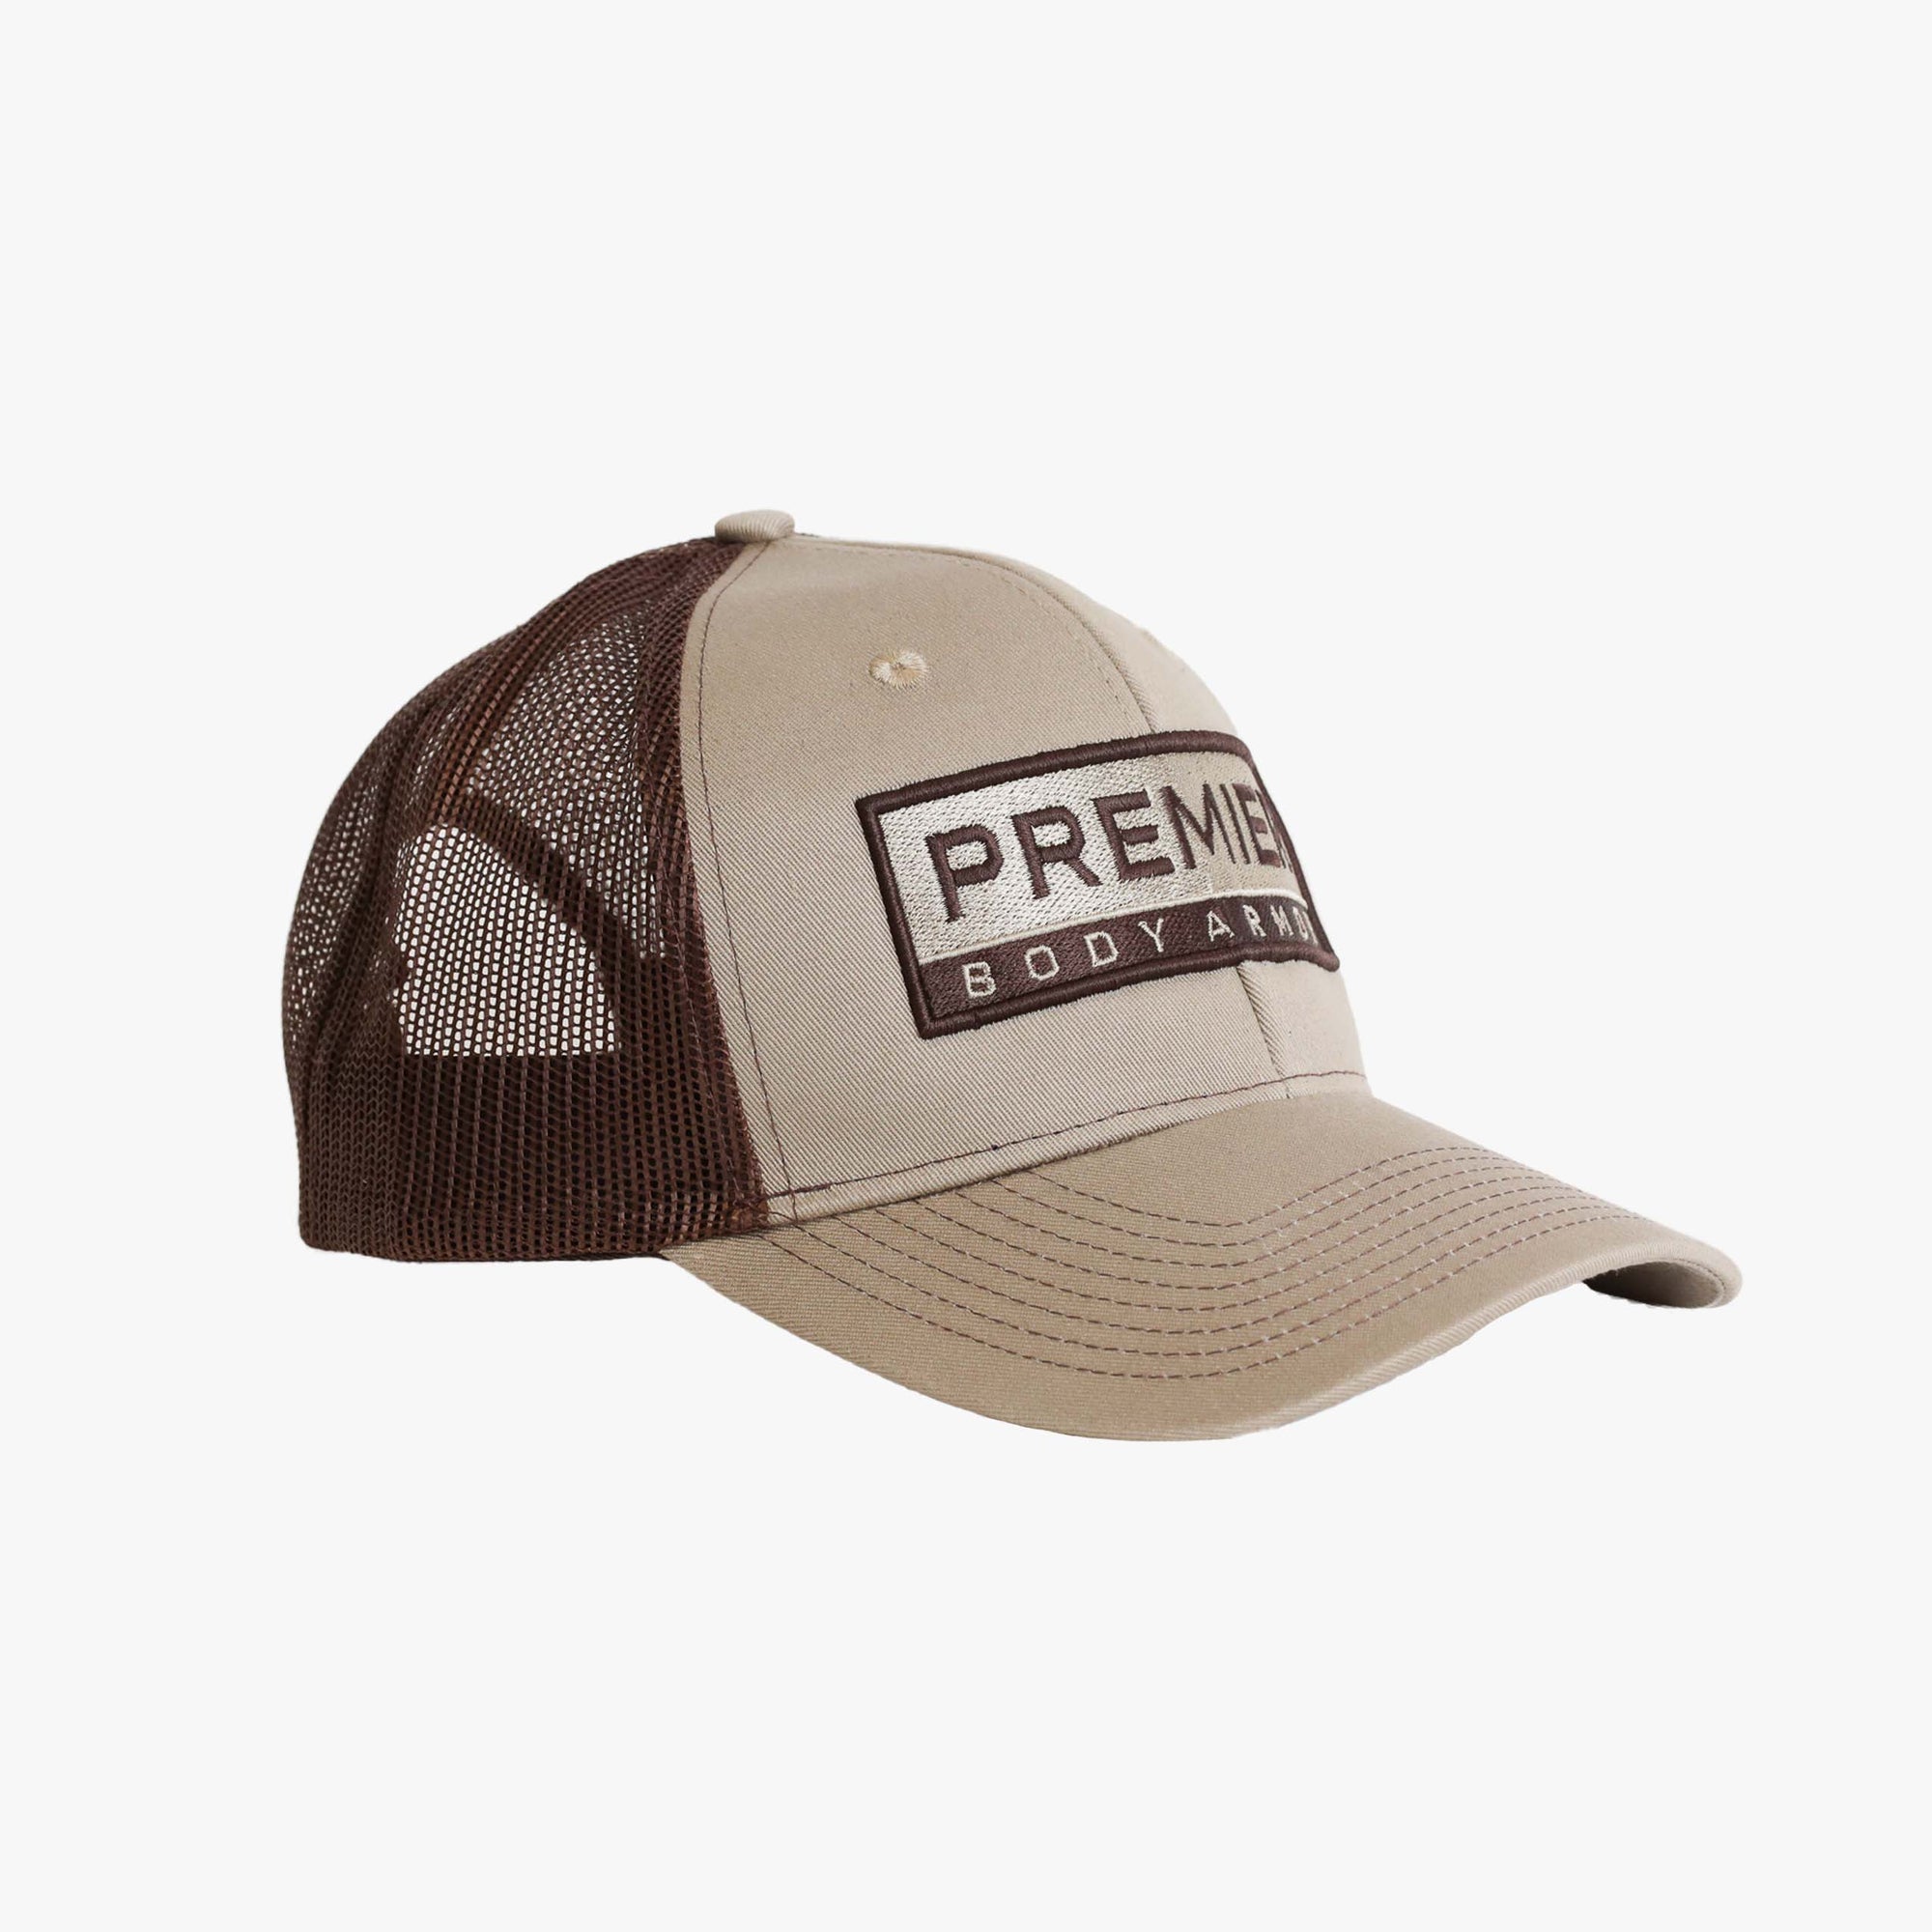 Image of black and white Premier Body Armor trucker hat. 